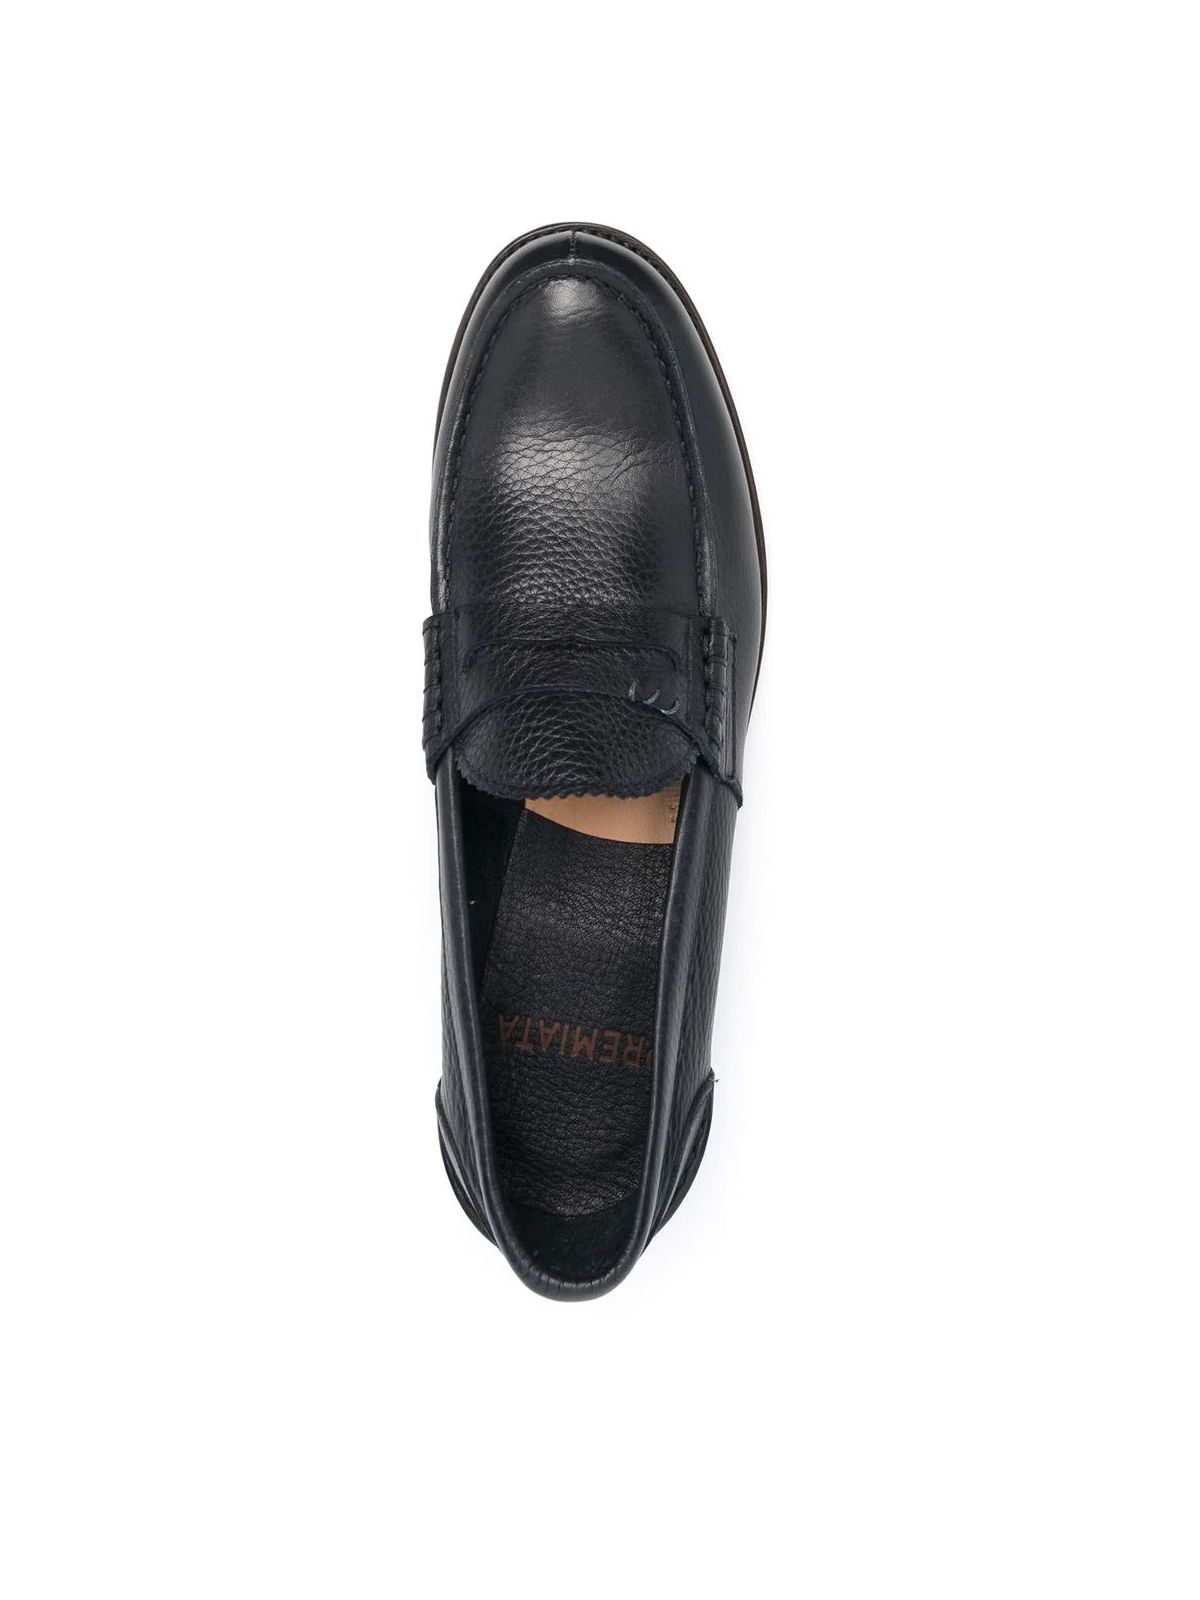 Shop Premiata Men's Leather Loafers